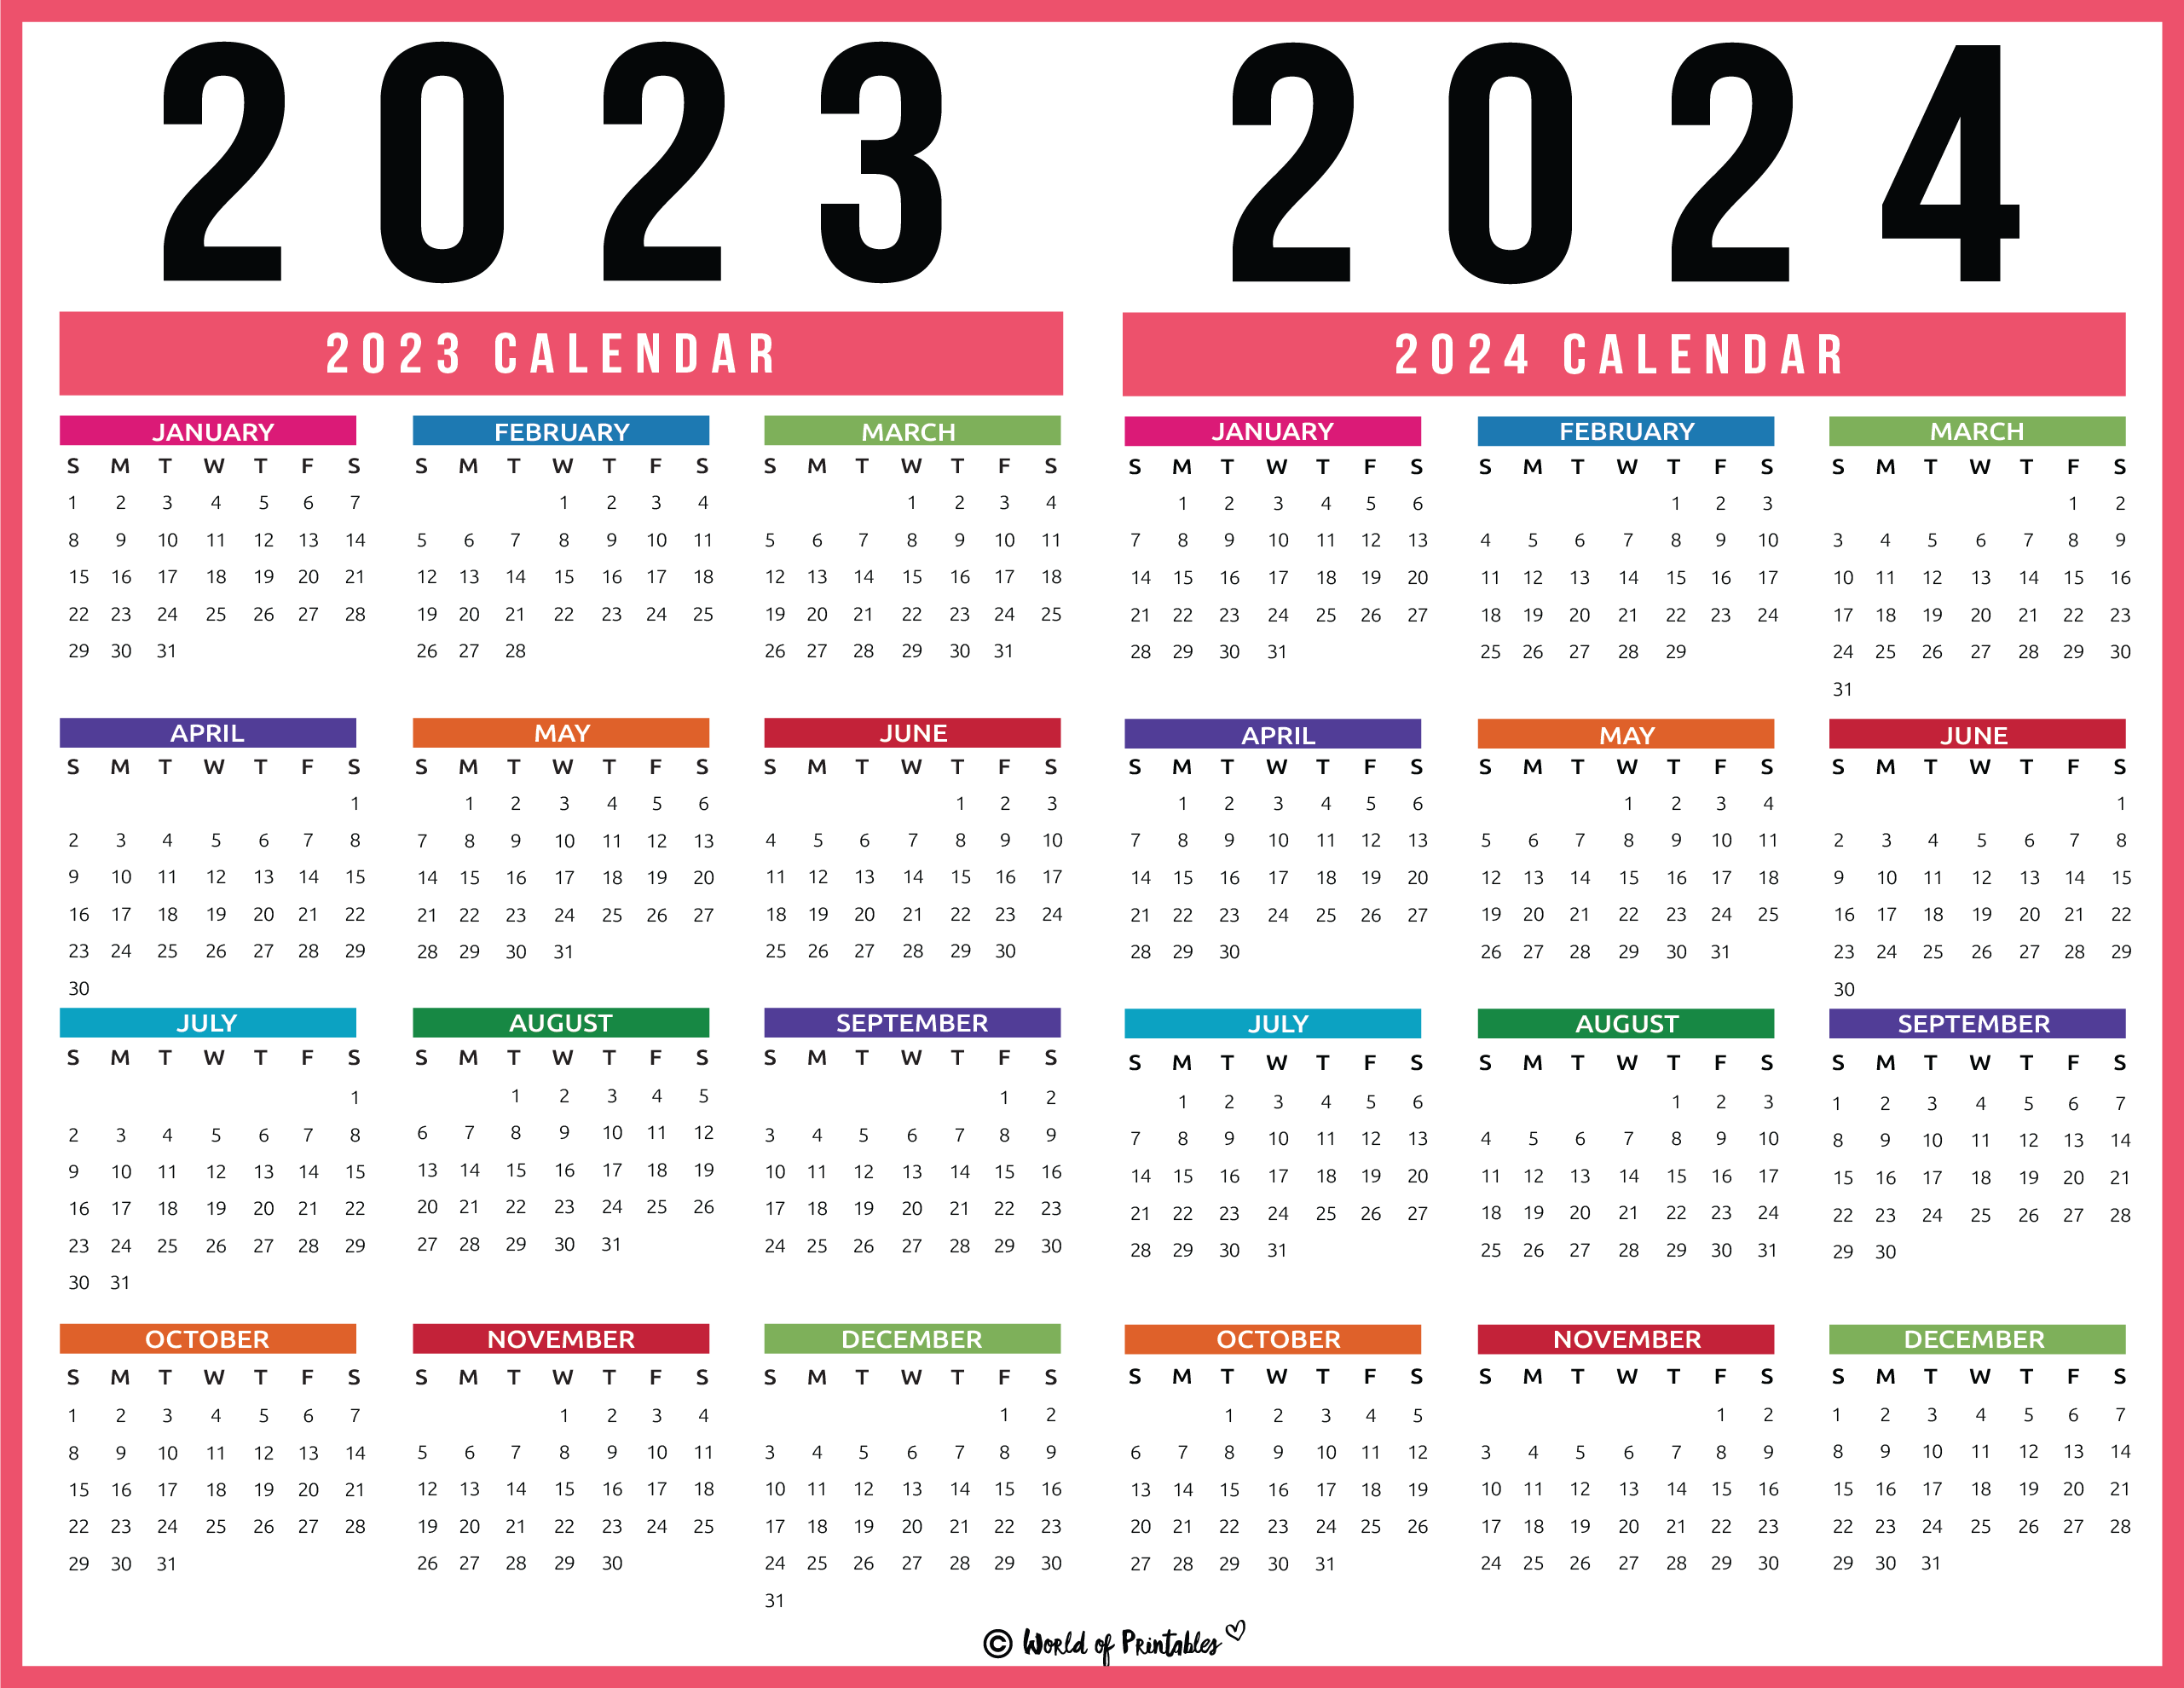 2023 2024 Calendar Free Printables - World Of Printables for Printable Calendar 2023 2024